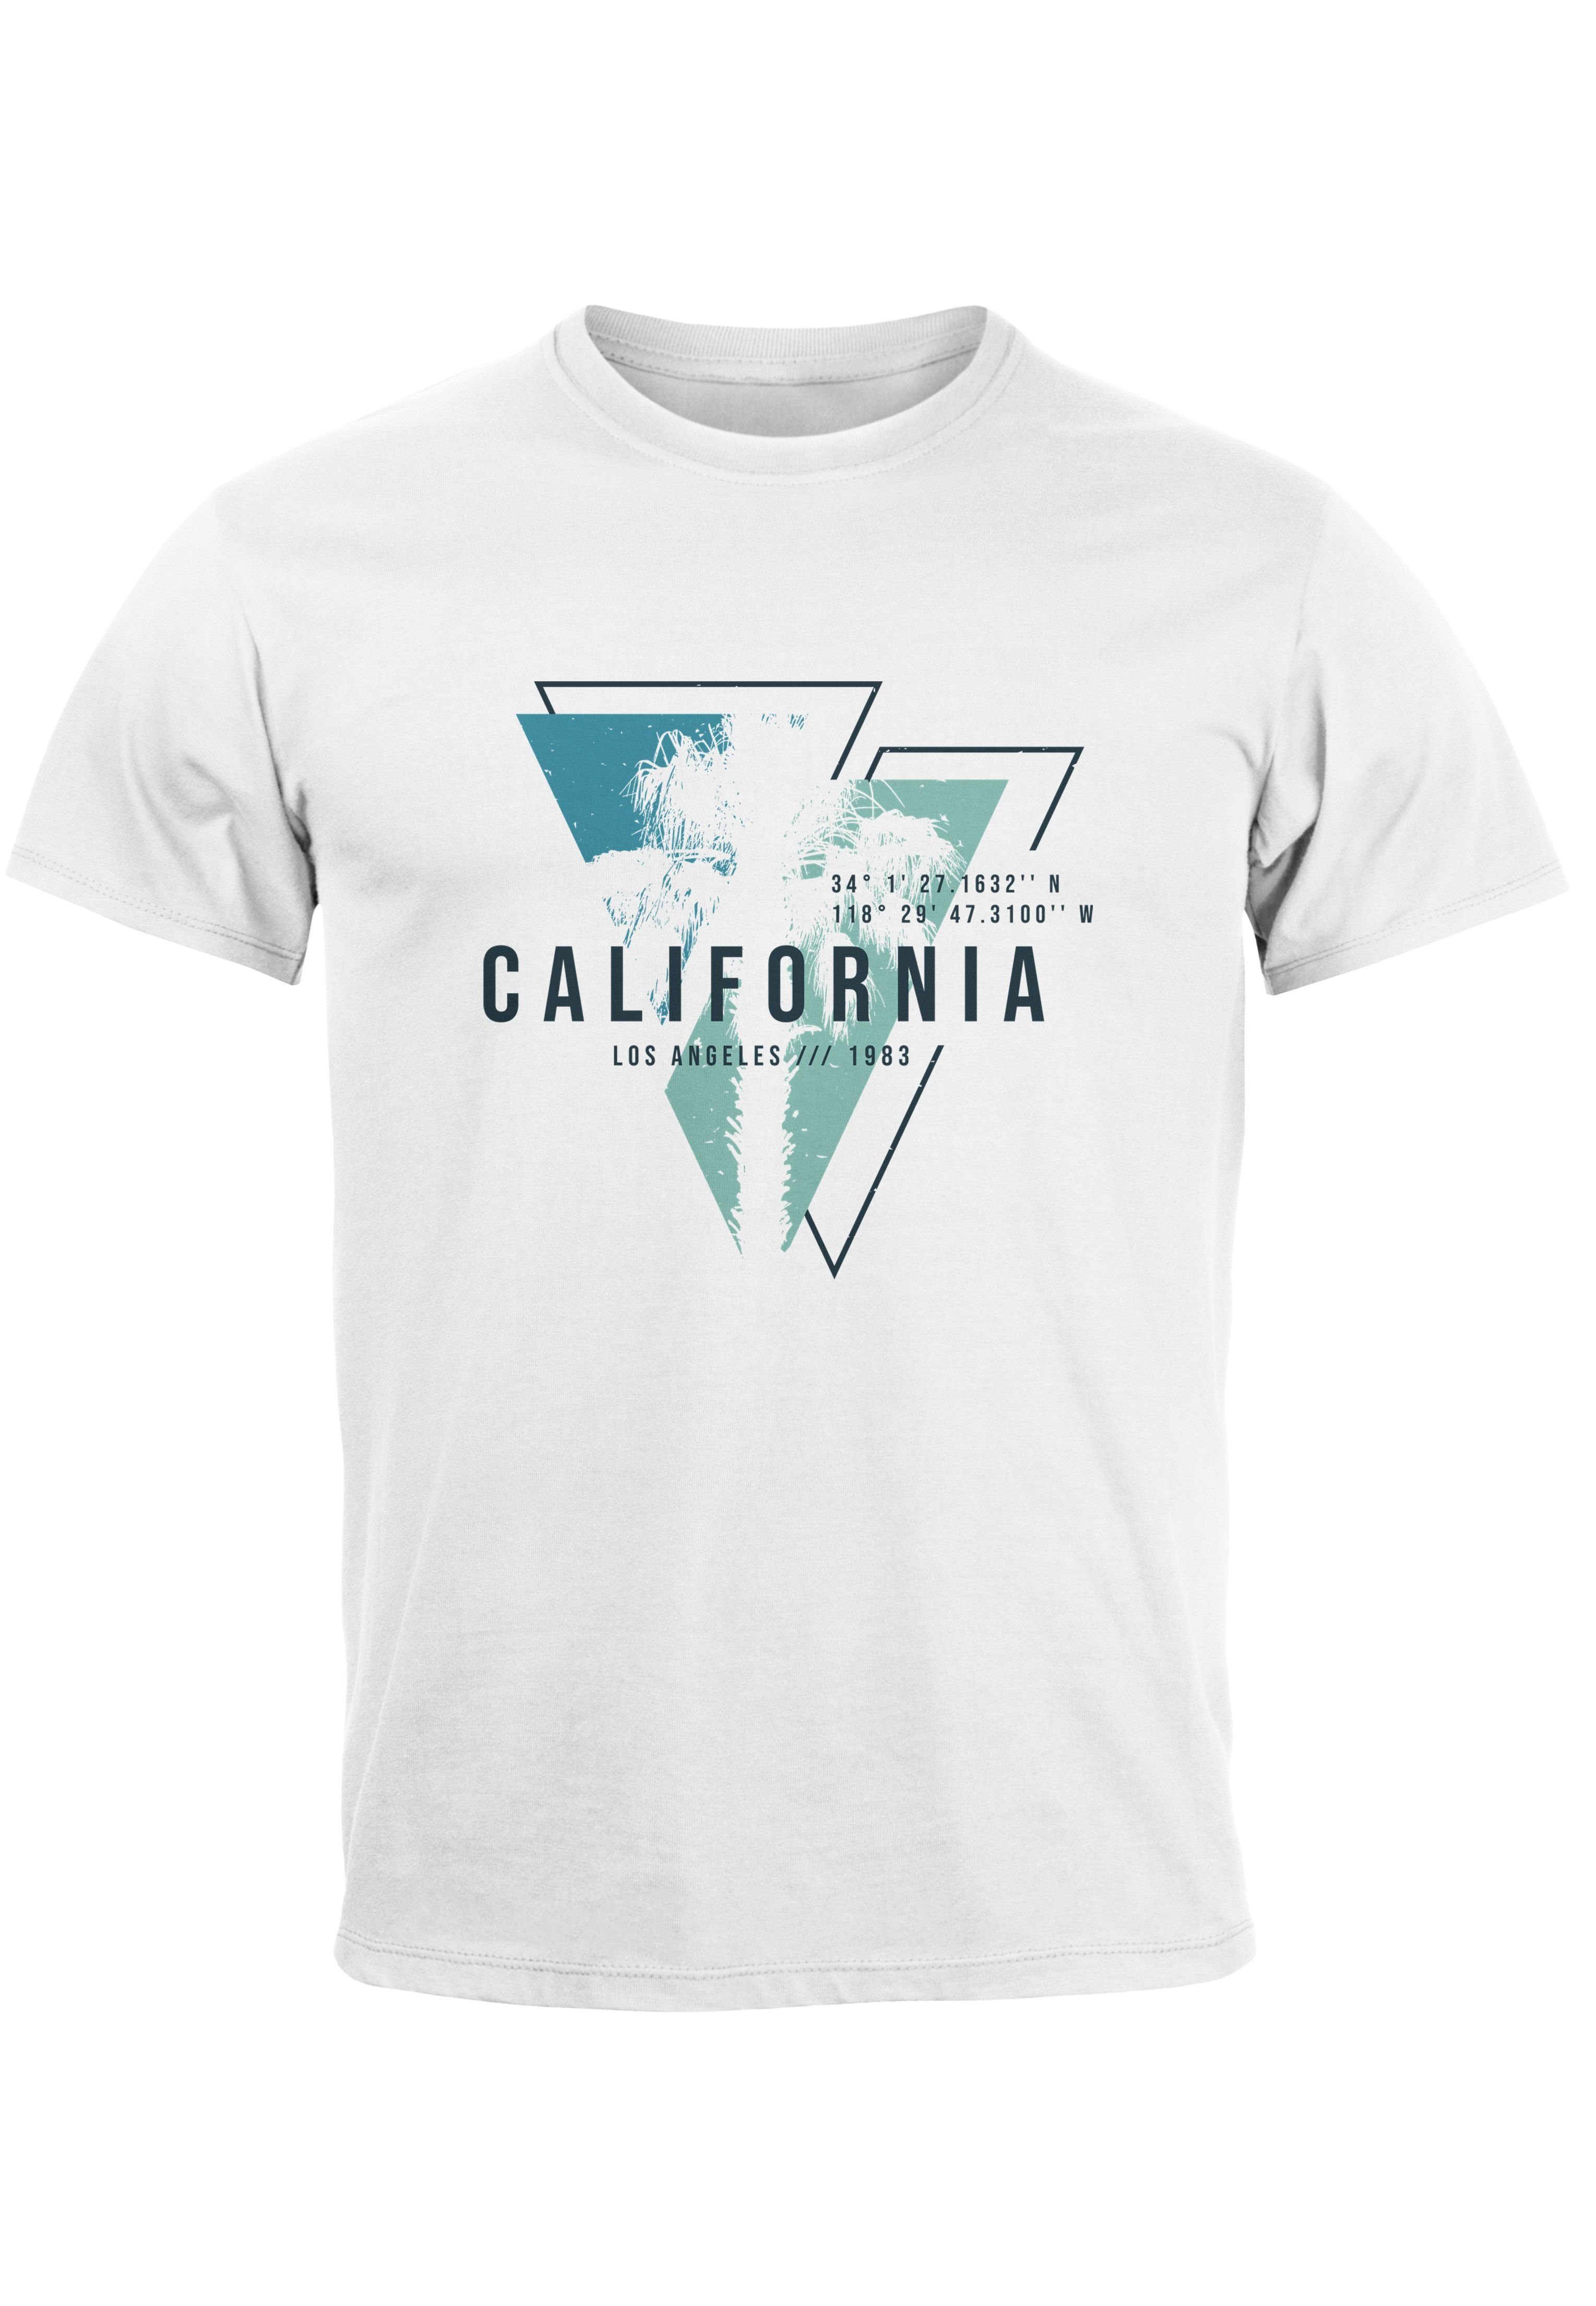 Neverless Print-Shirt Herren T-Shirt California Los Angeles Surfing Motiv Sommer Fashion USA mit Print weiß